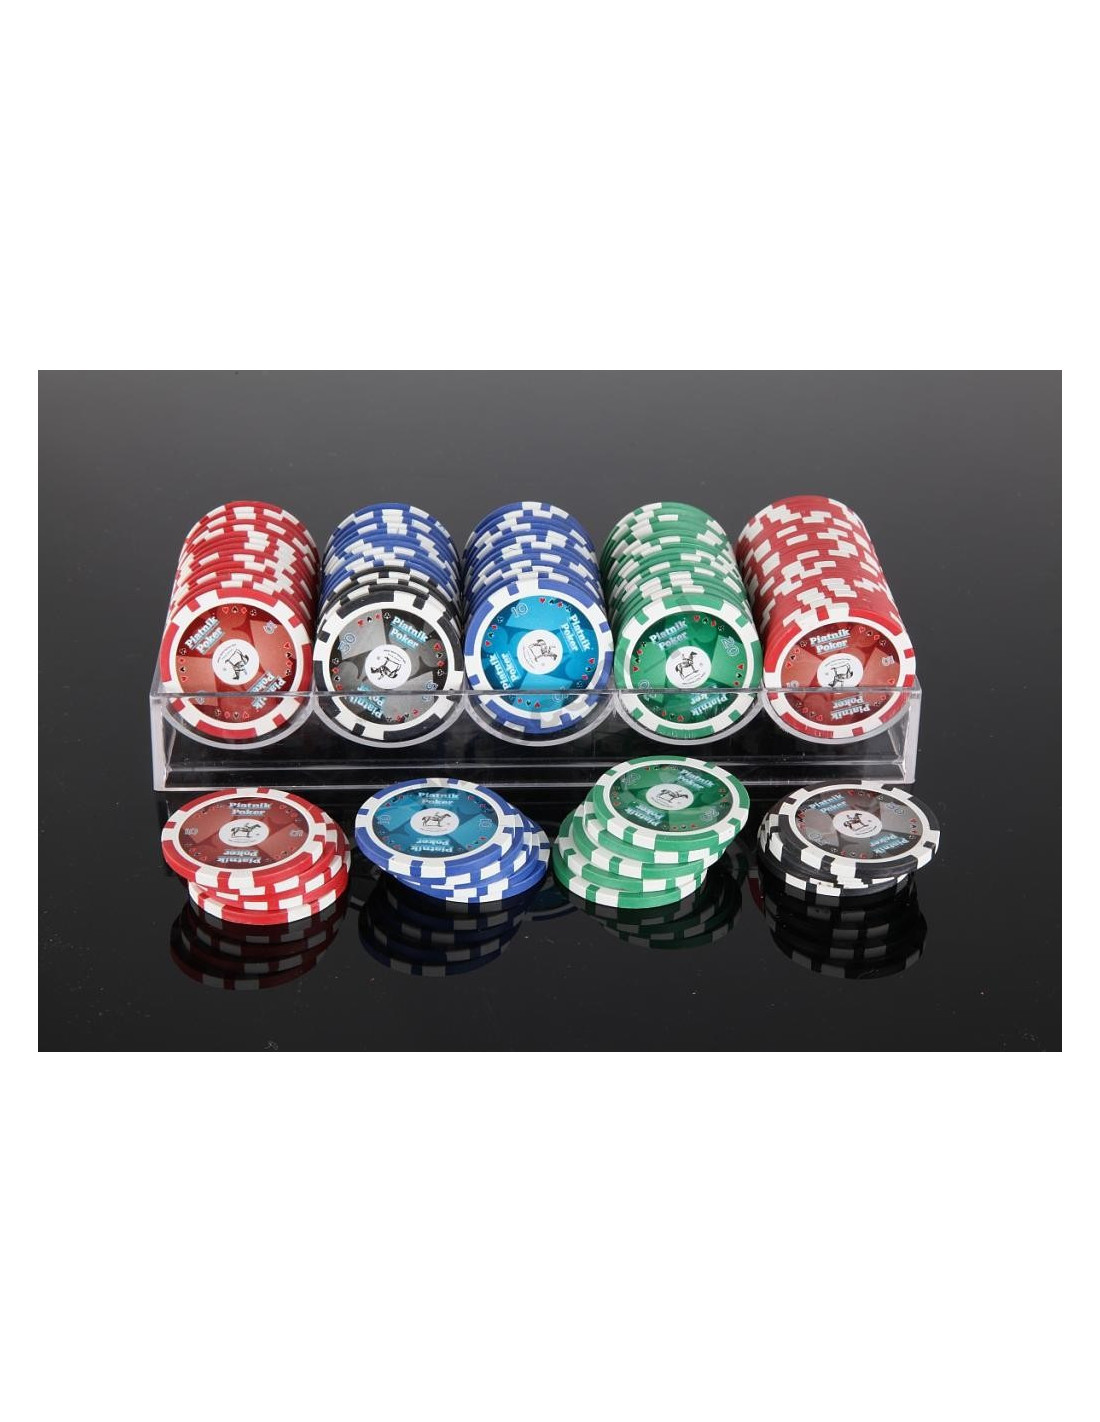 Piatnik - All in - Faszination Poker